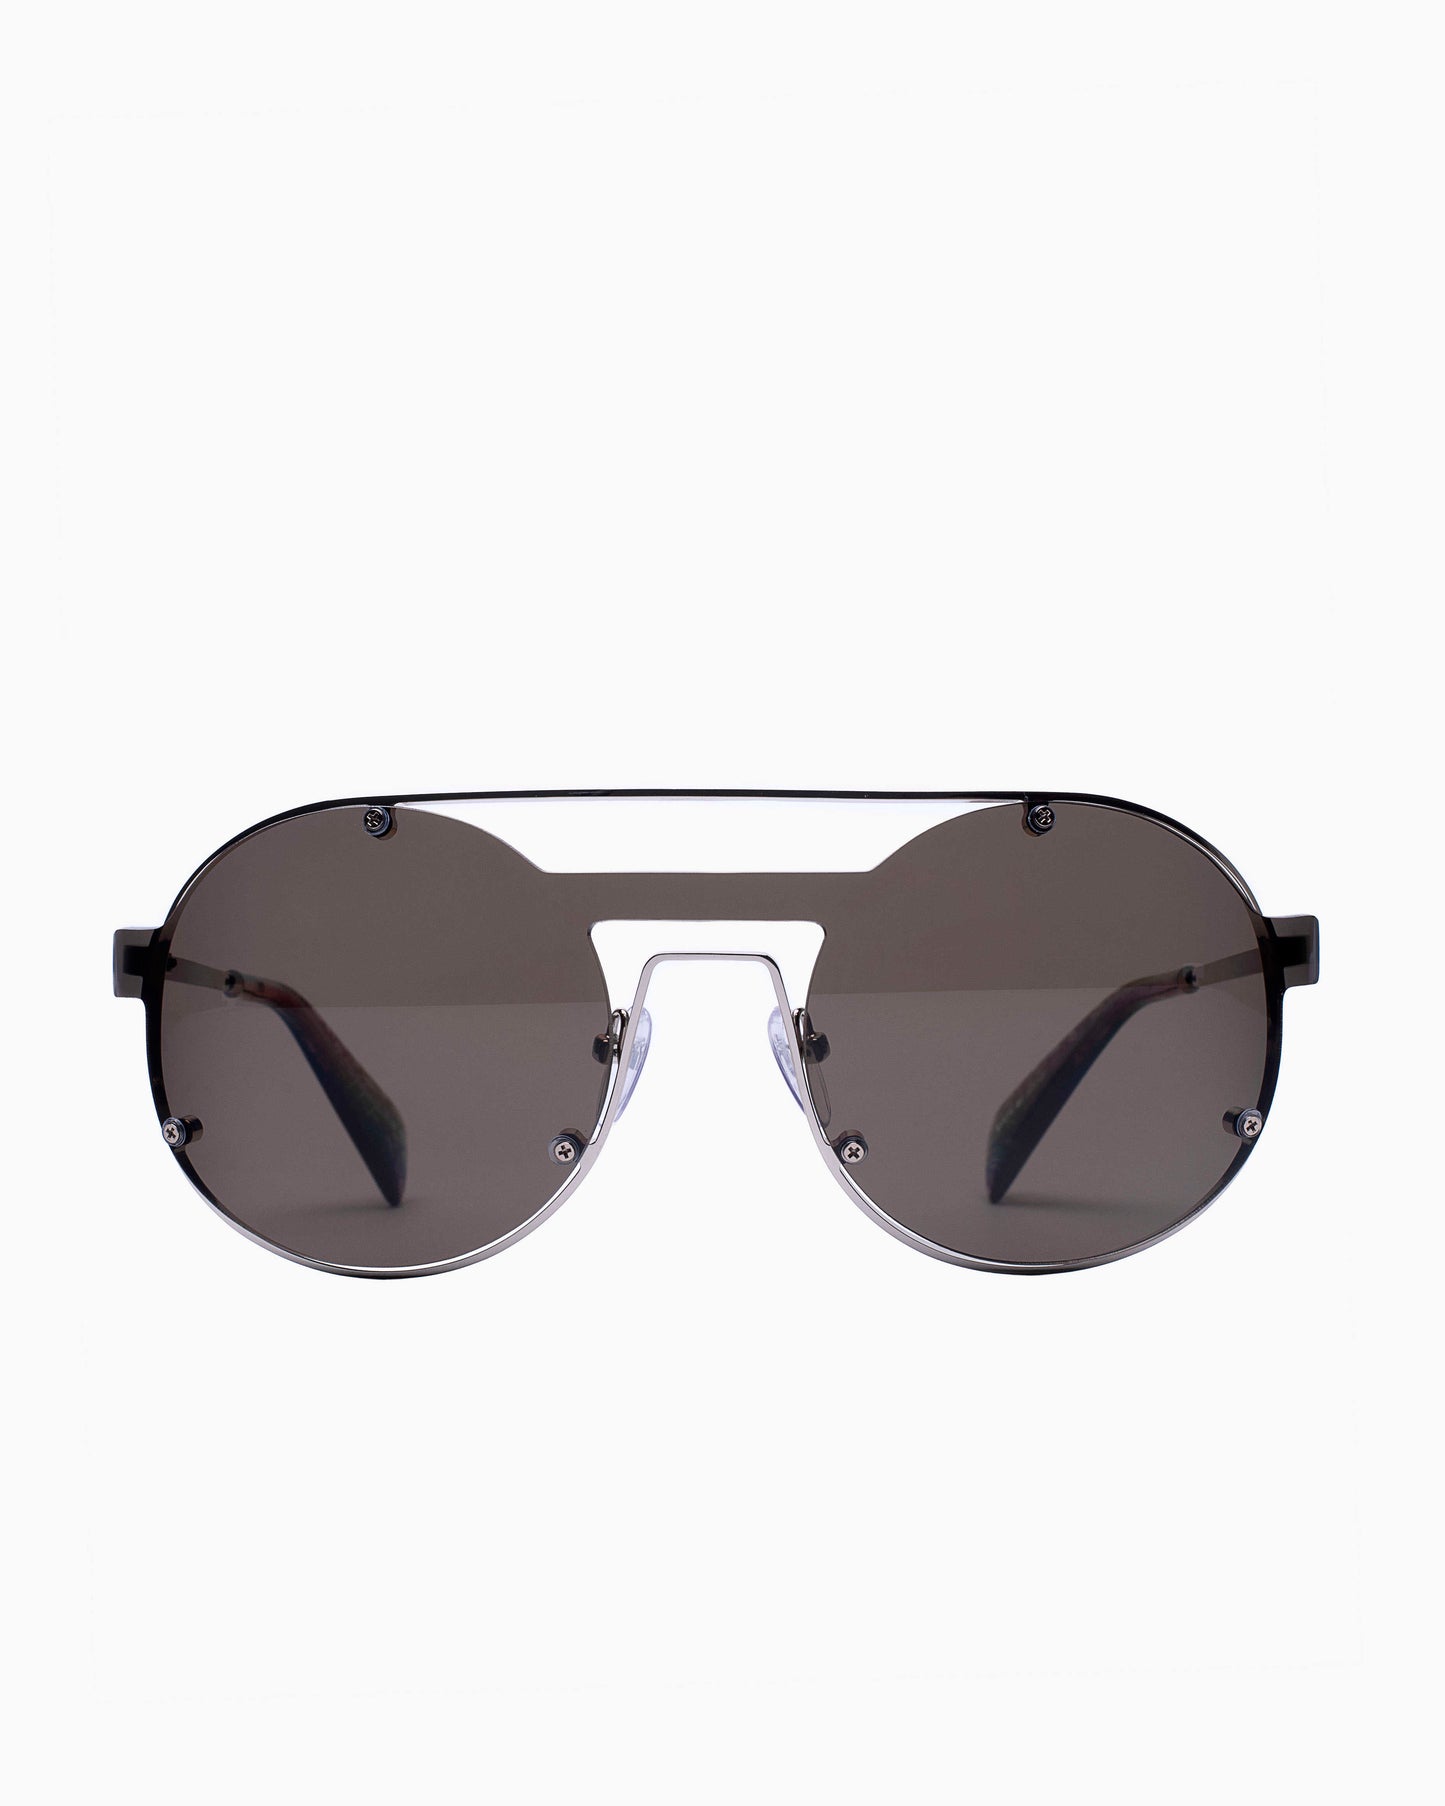 Yohji Yamamoto - 7026 - 479 | Bar à lunettes